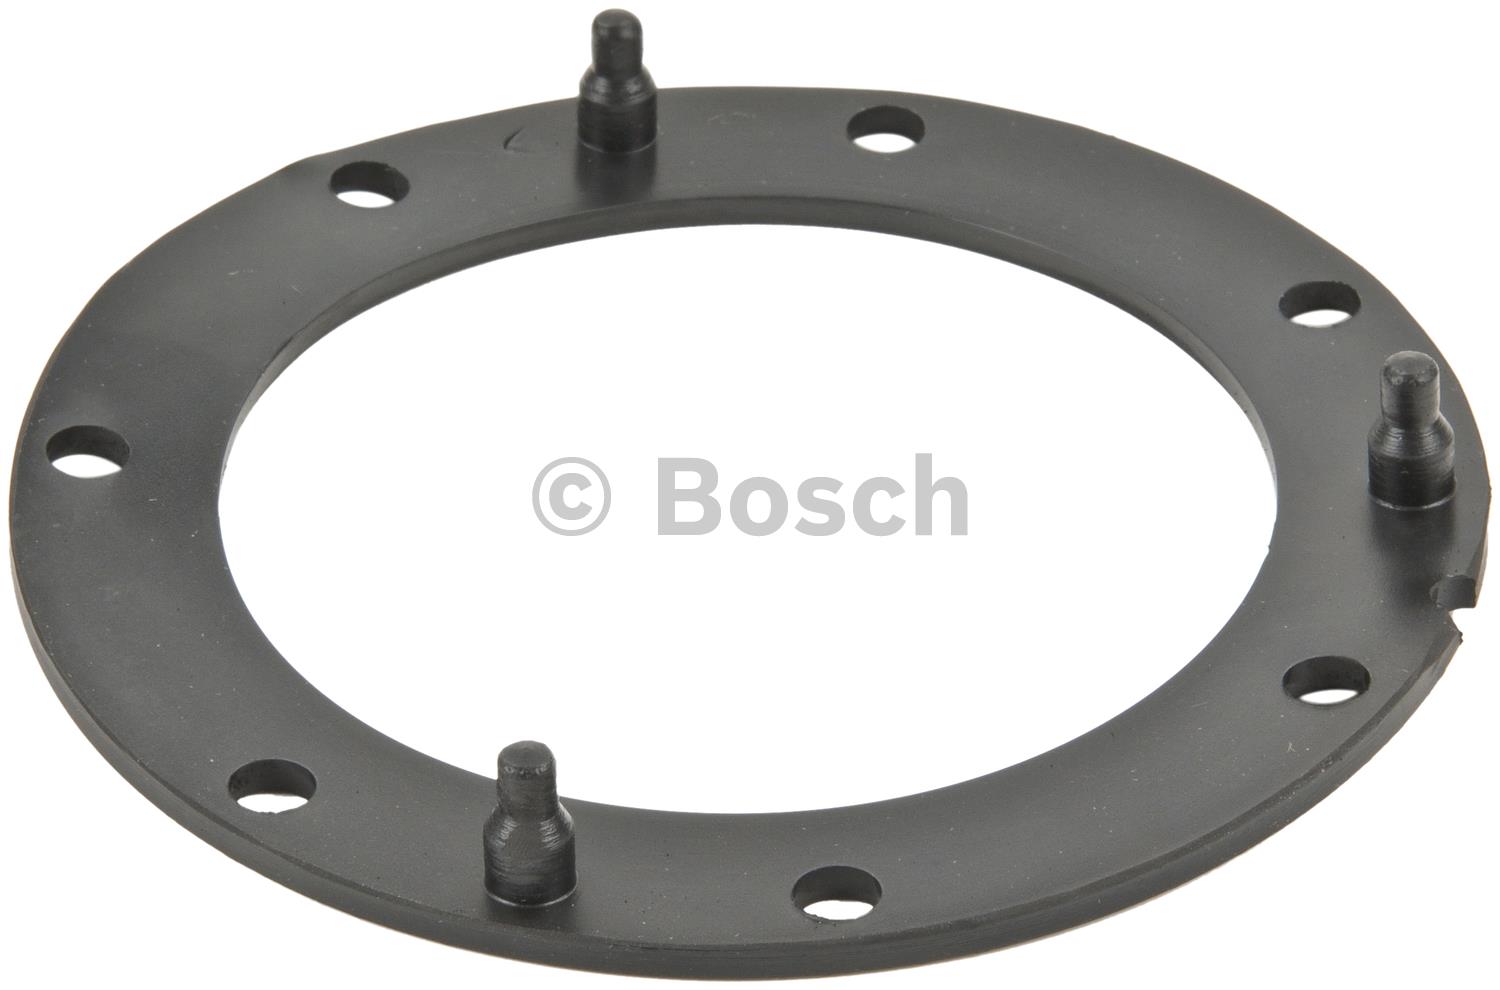 Picture of Bosch 68201 Fuel Pump Gasket